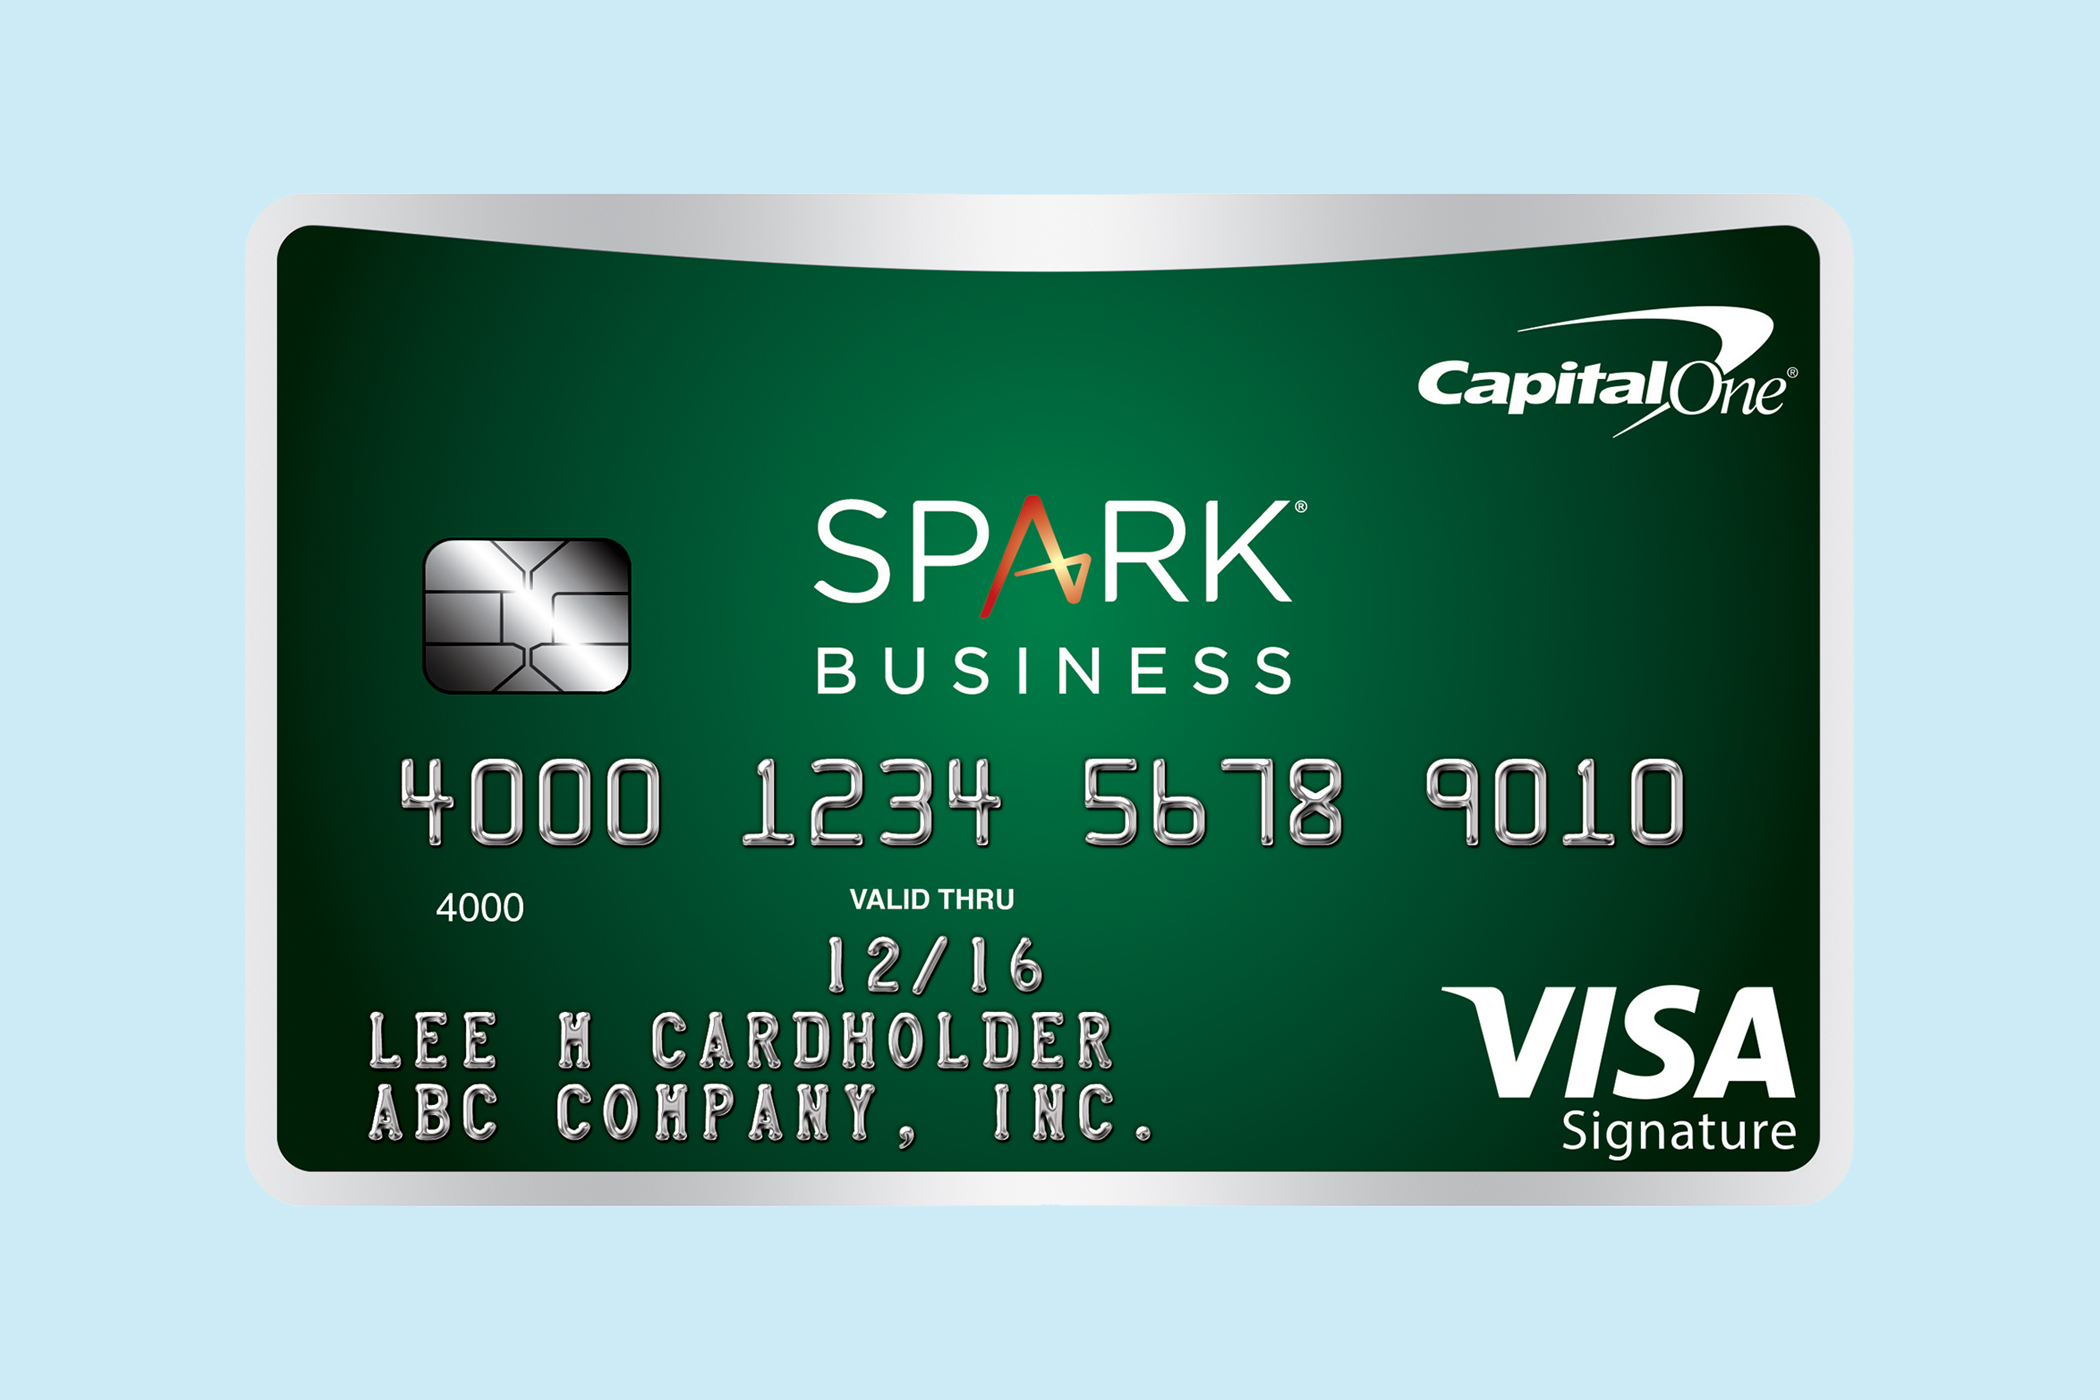 Capital One Credit Card Should I Get the Spark Cash